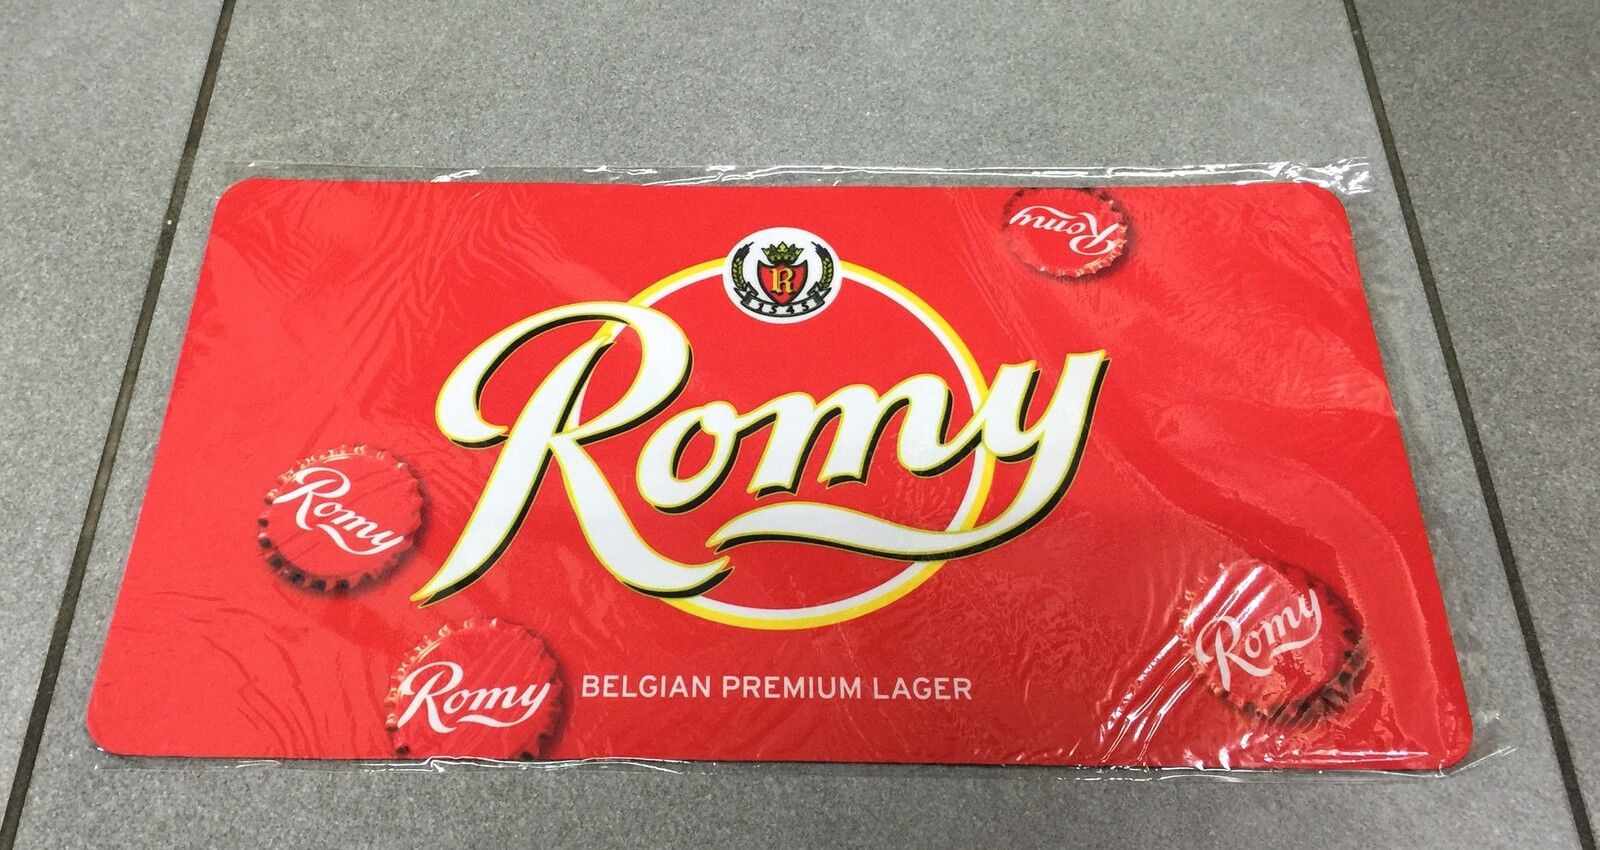  OFFICIAL RED BAR MAT BELGE BEER BEER ROMY BELGIAN PREMIUM LAGER